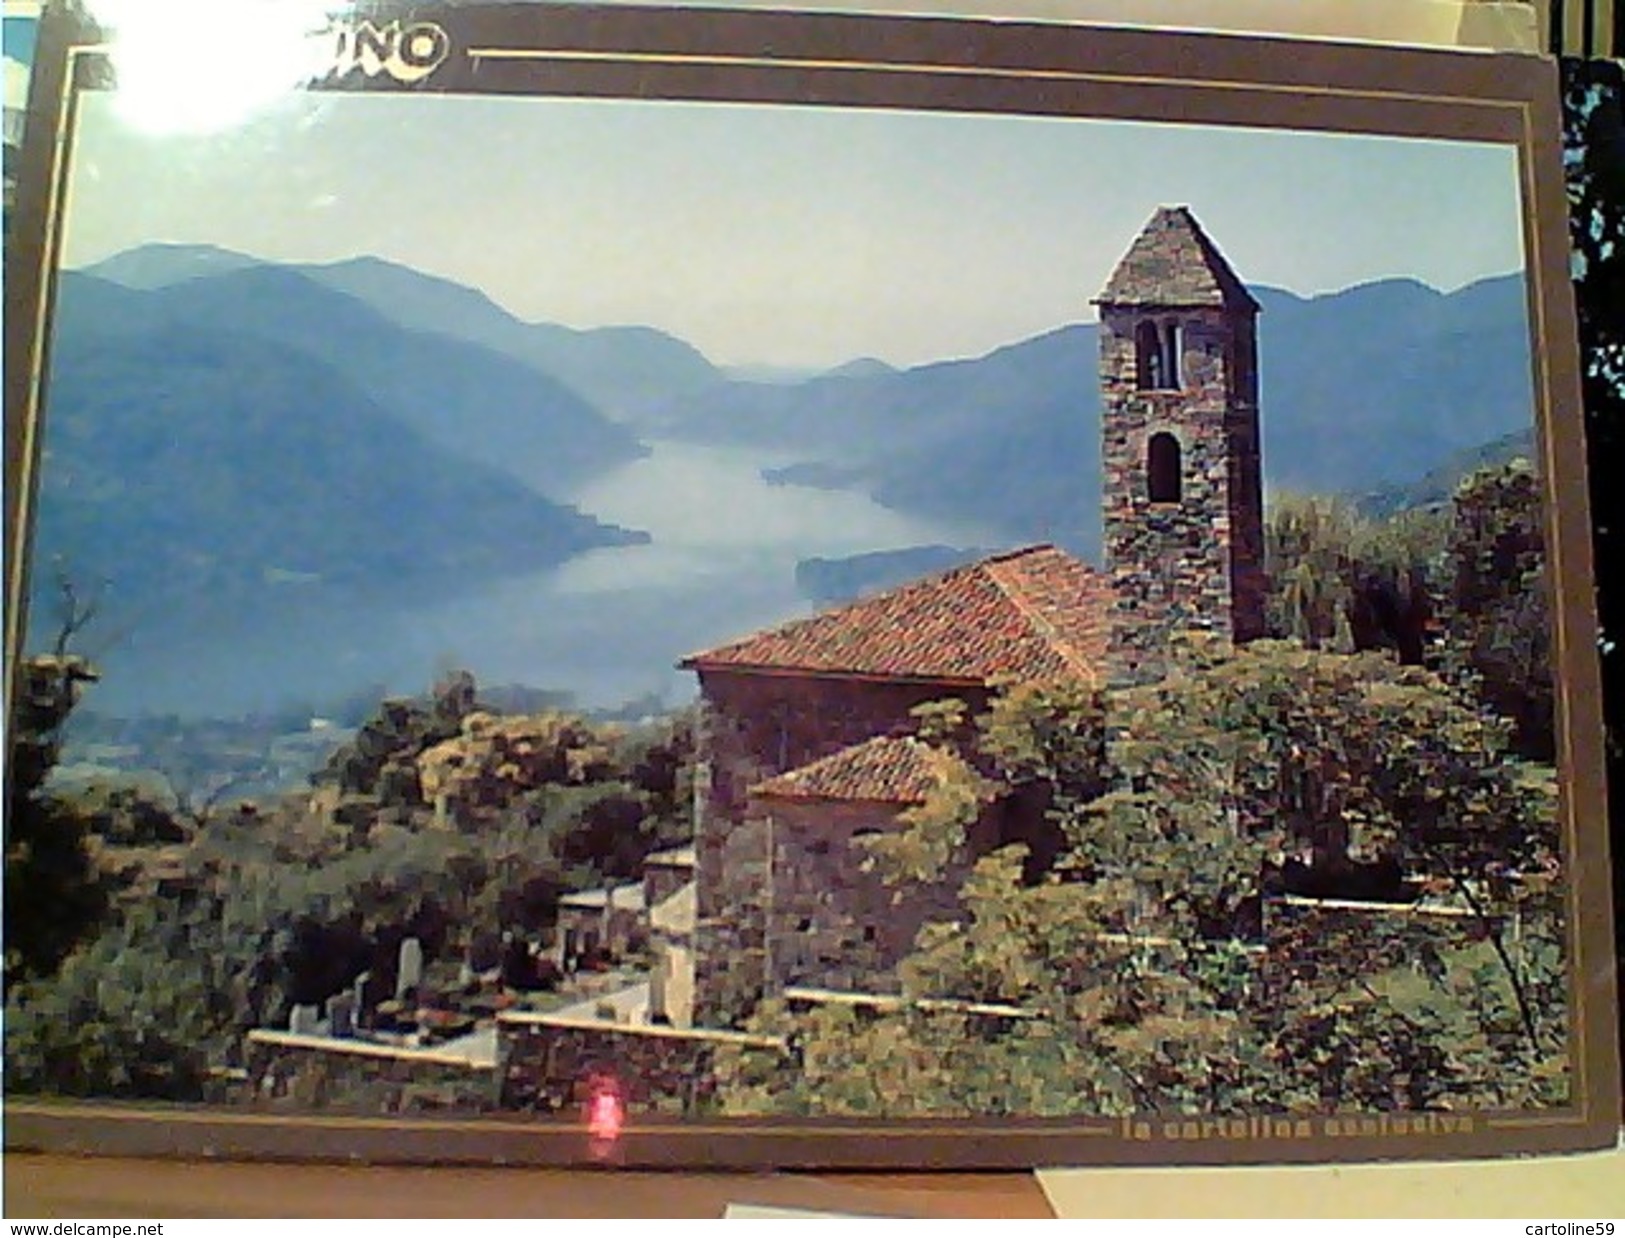 SUISSE SVIZZERA Cademario S/Lugano - Chiesa S.Ambrogio VB1995 SELO STAMP ELETTRICITA GC14018 - Cademario